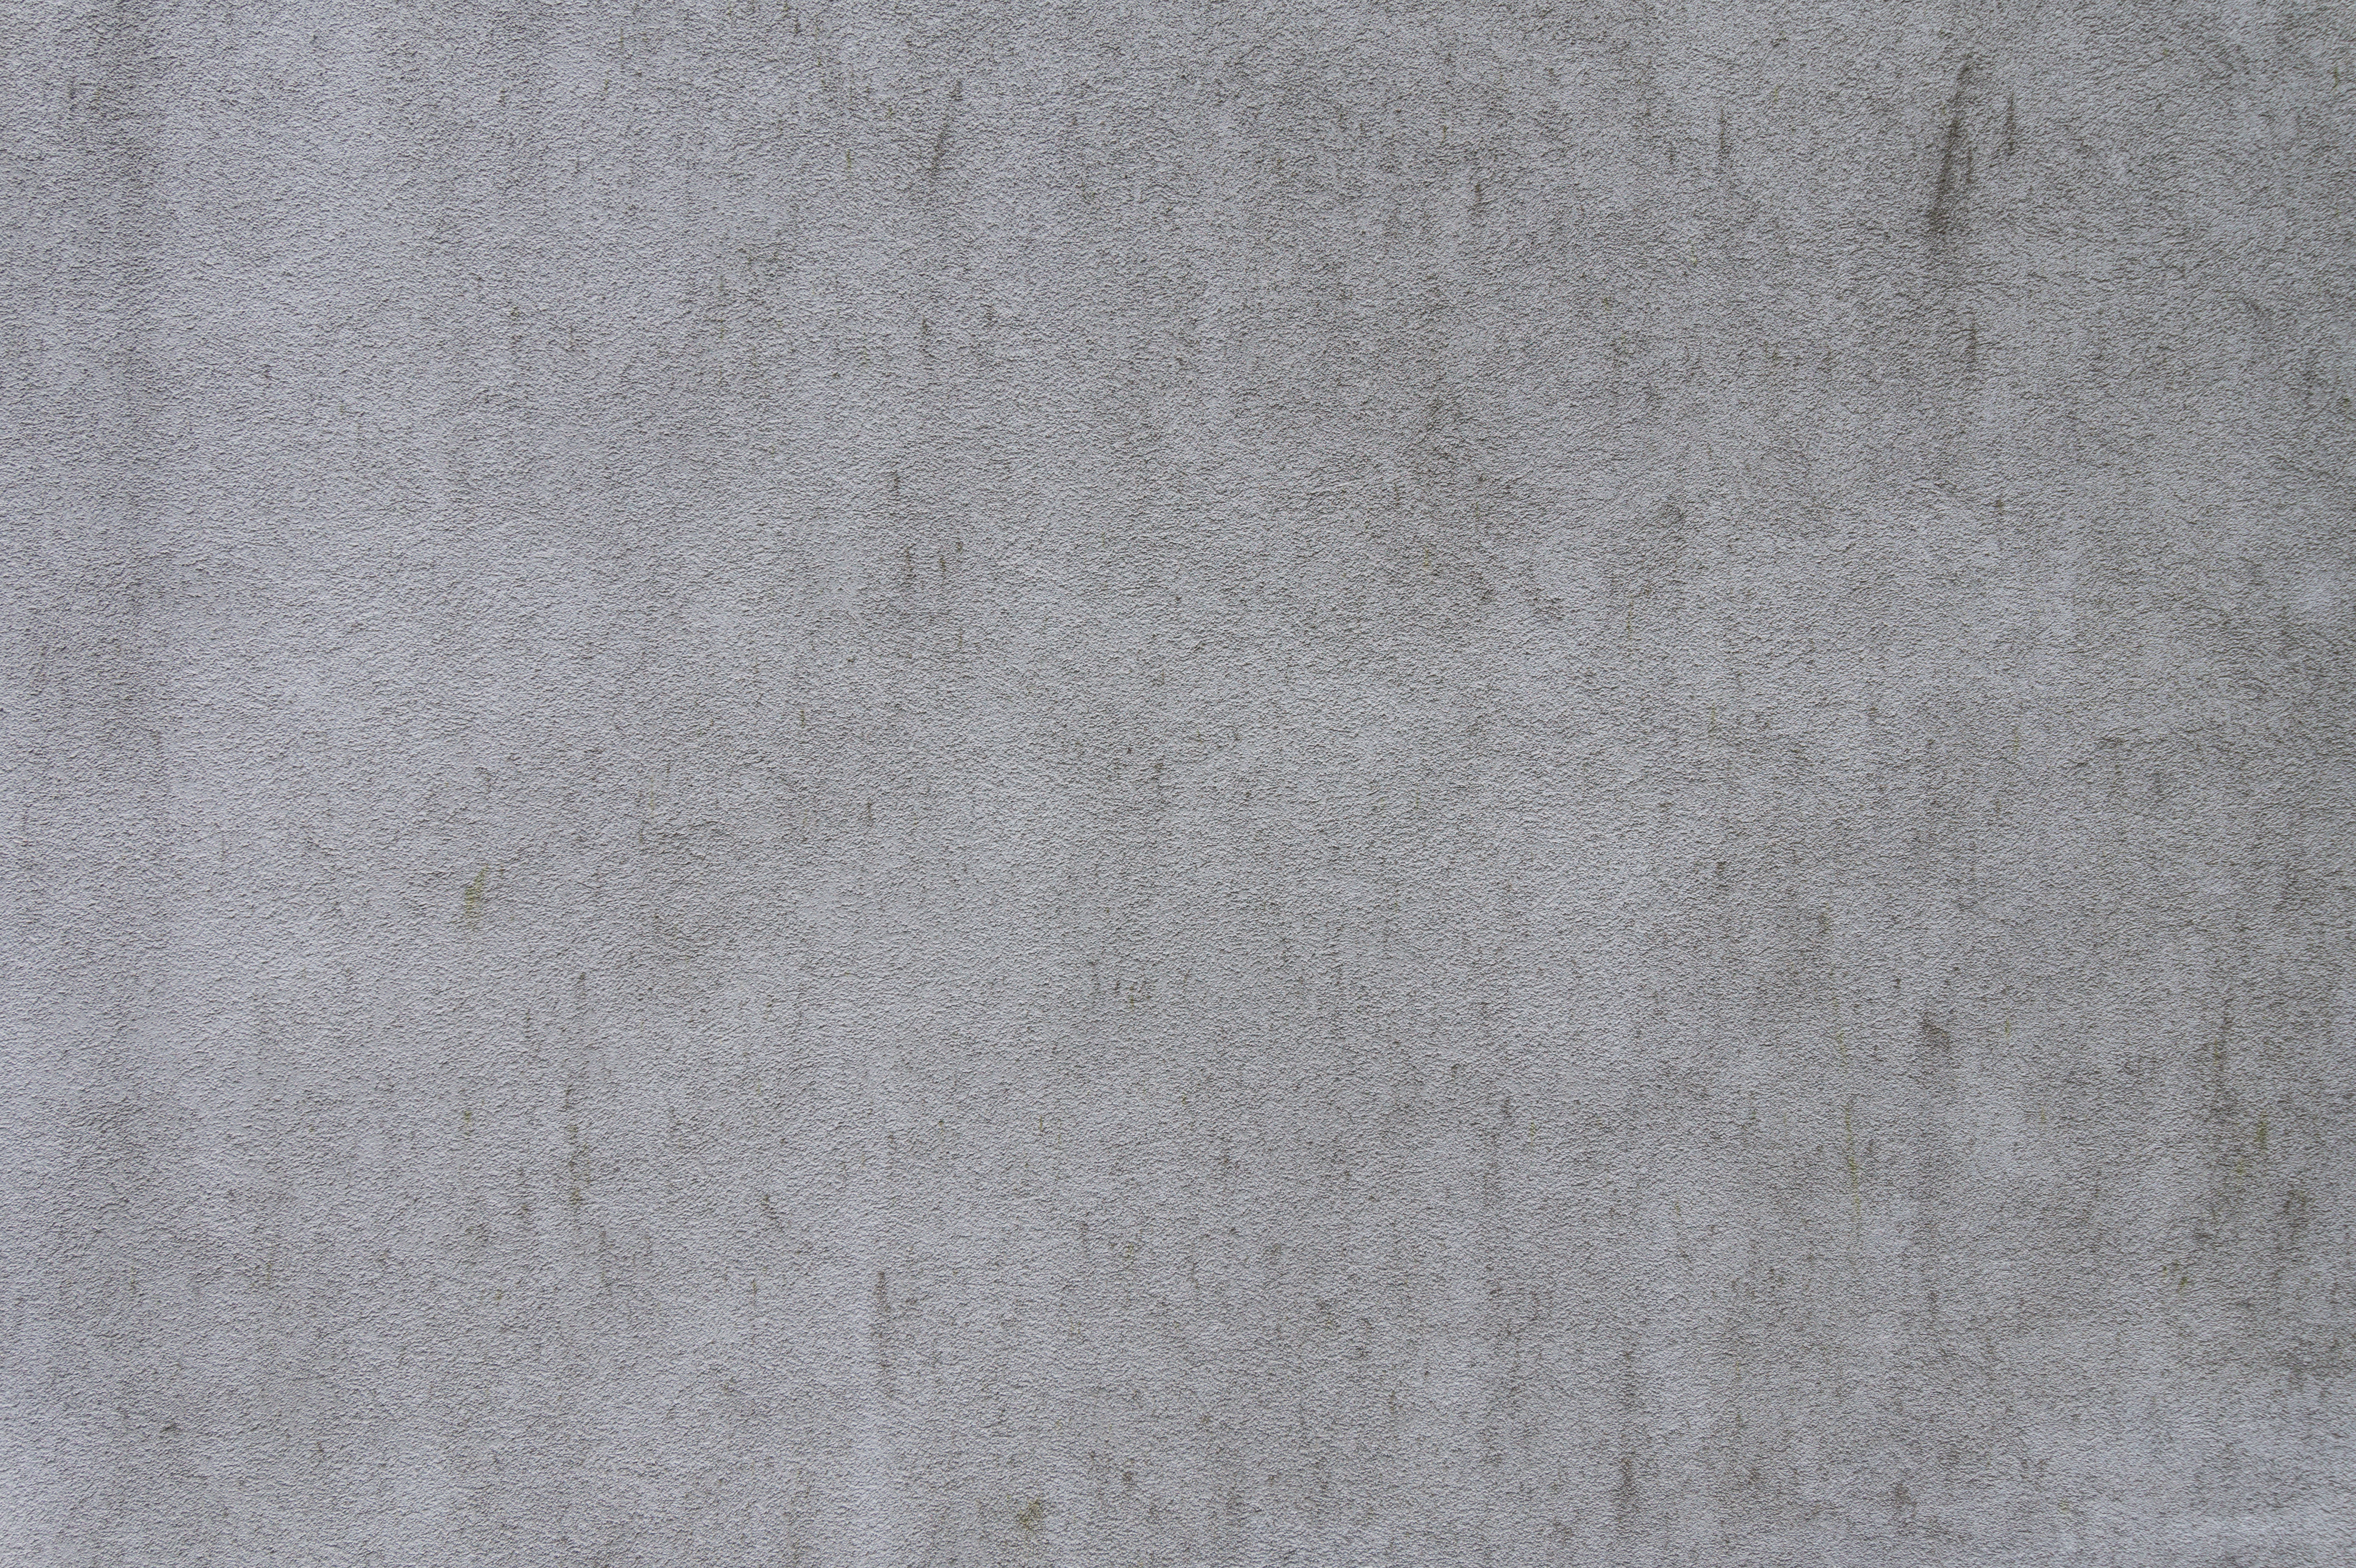 Concrete plain wall - Concrete - Texturify - Free textures